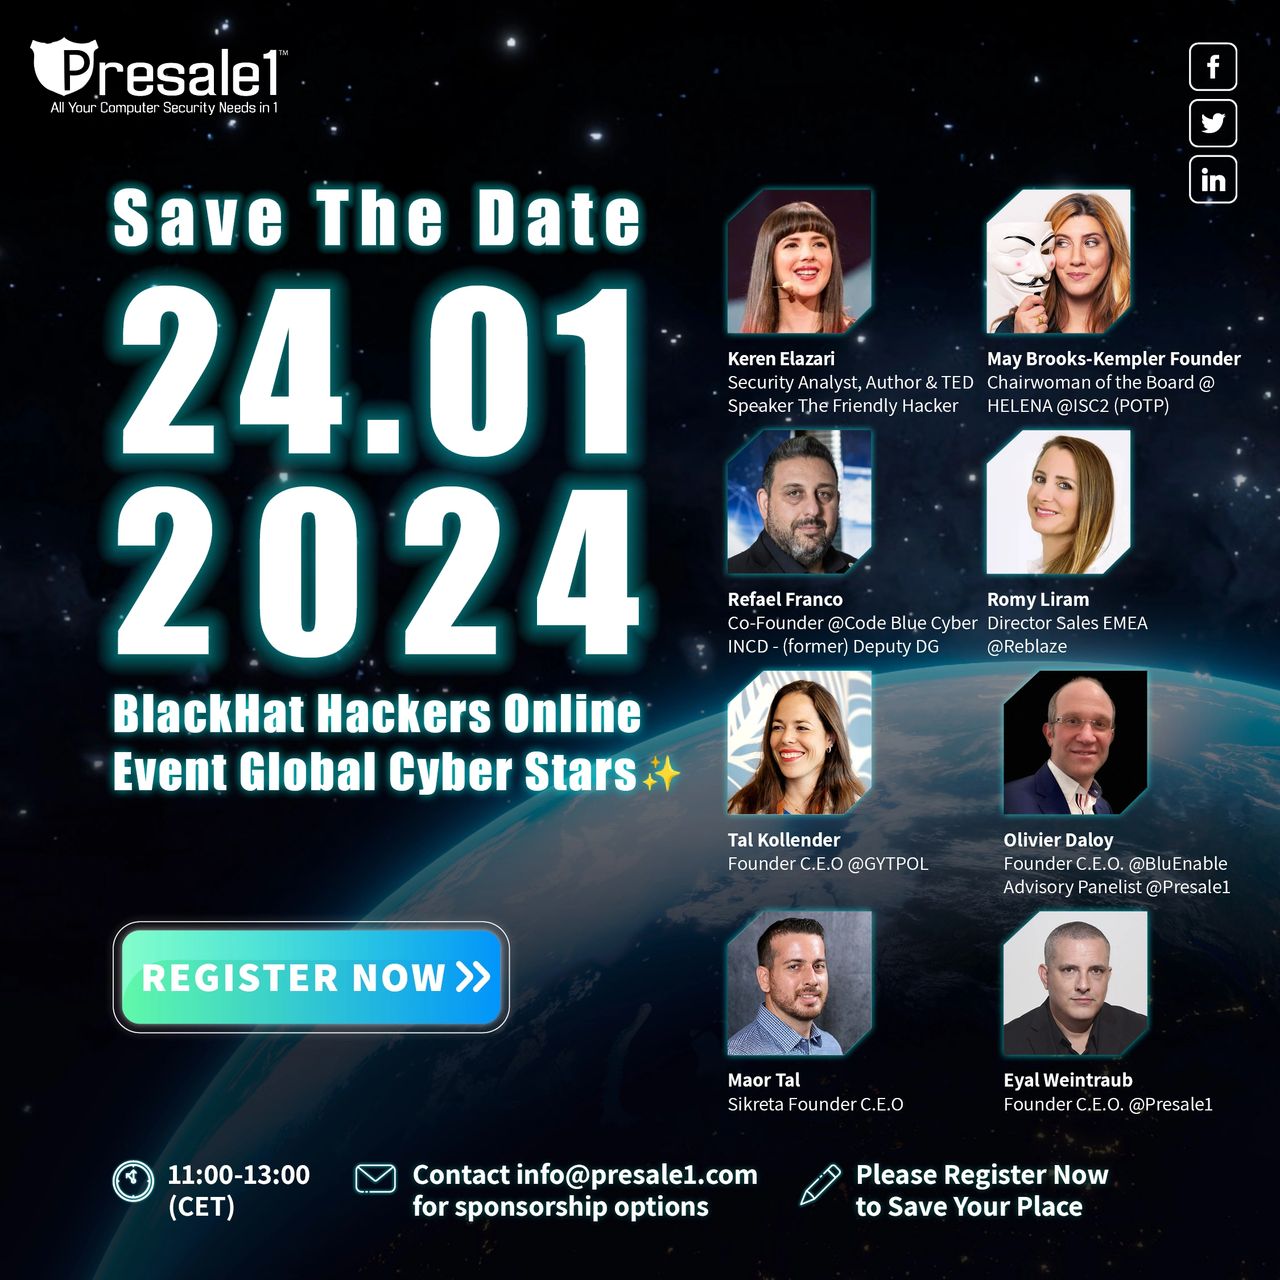 24.1.24 Presale1's Online BlackHat Hackers Cyber Event Invitation